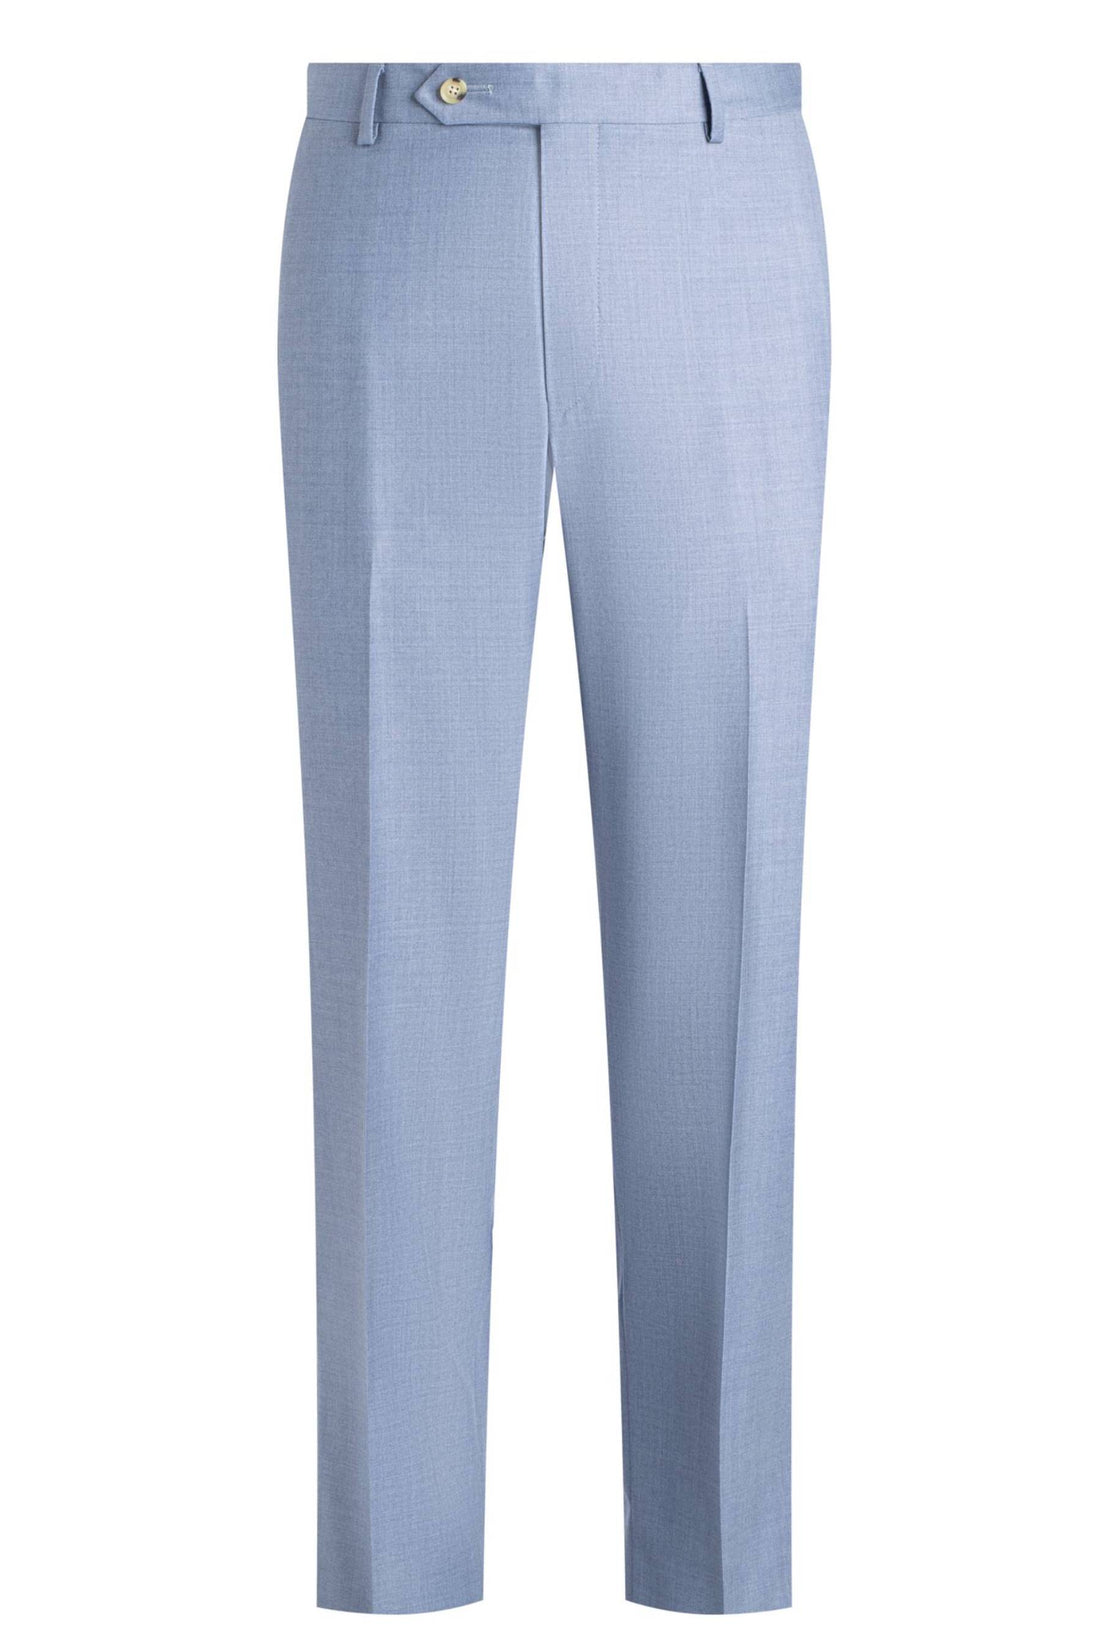 Samuelsohn Light Blue Flat Front Trousers Front